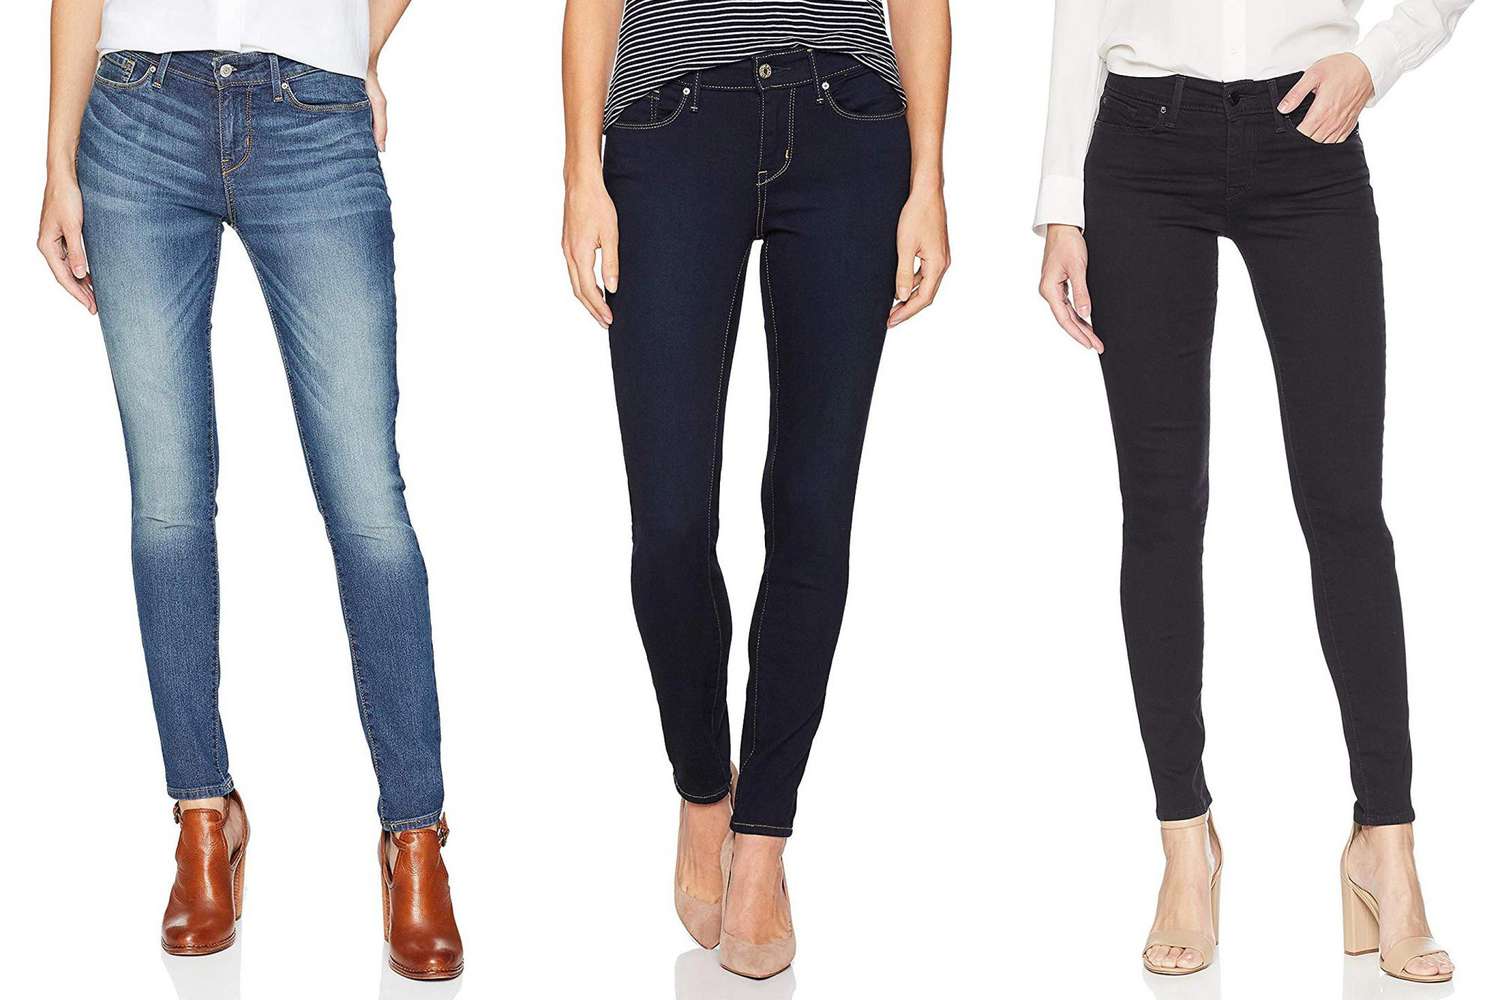 Levis Skinny Jeans Sale on Amazon 